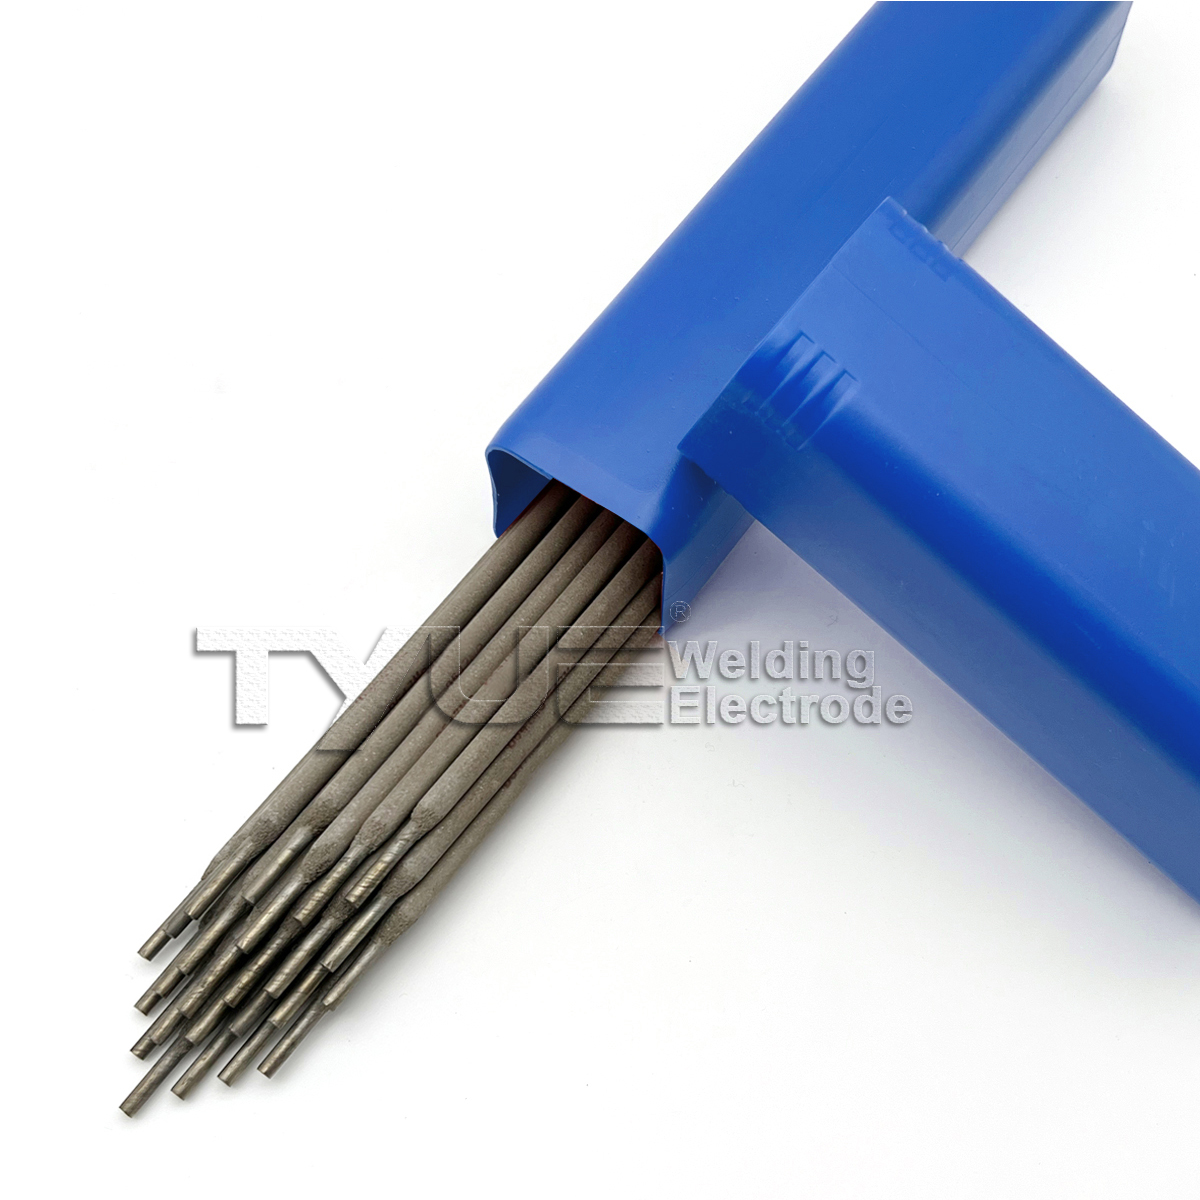 Hardfacing Welding Electrode DIN 8555 (E10-UM-65-GRZ) Surface Welding Rod Type No.: TY-C LEDURIT 67 Arc Welding Stick